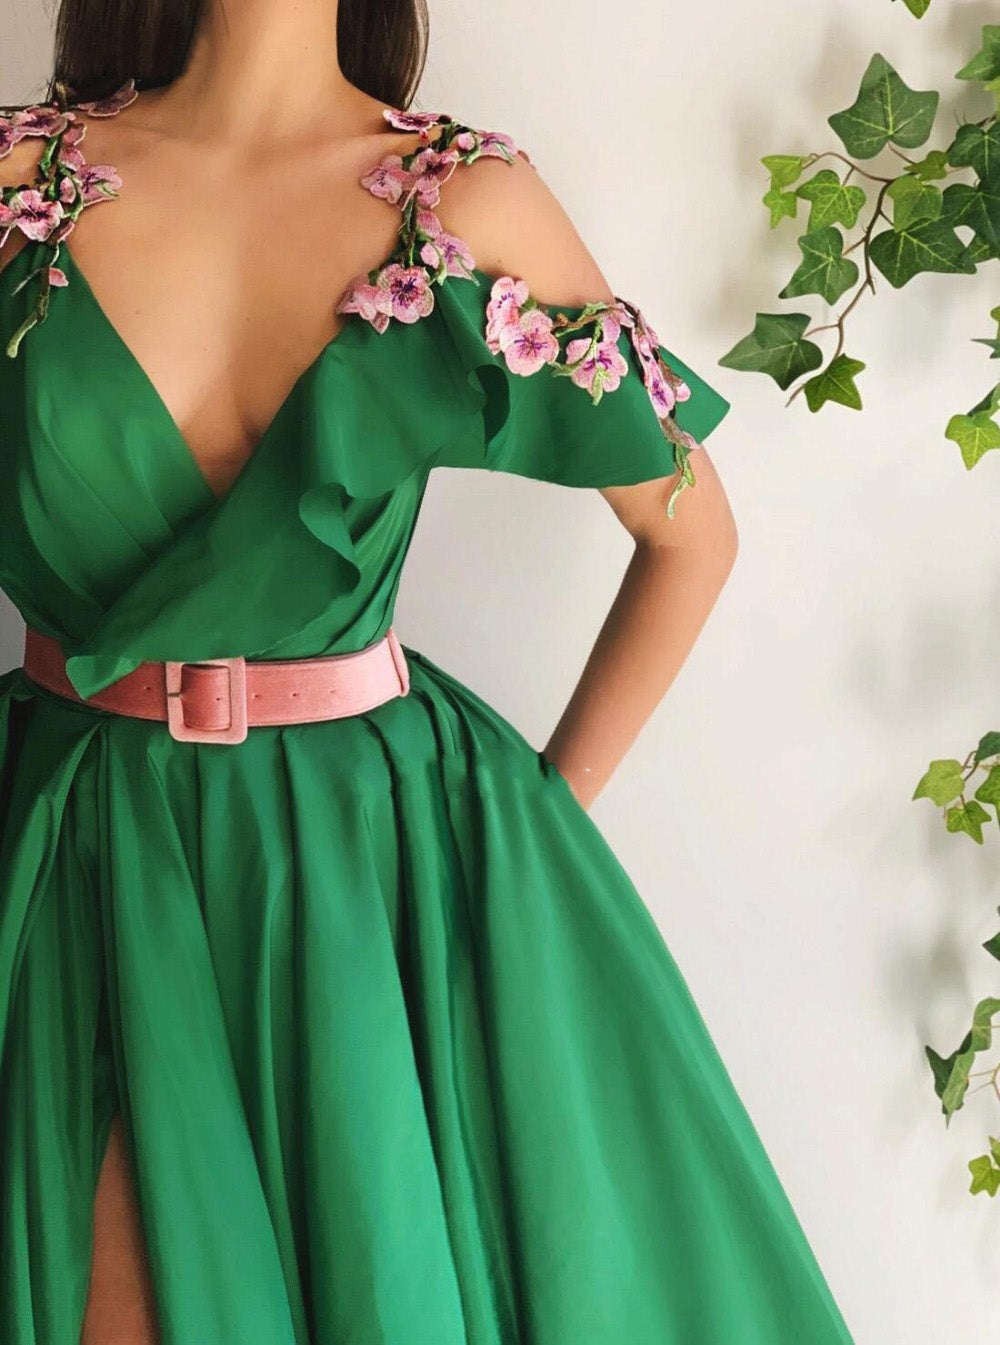 Green Satin Flower Prom Dresses High Split Side Cold Shoulder Appliques Formal Evening Party Gowns SA1680